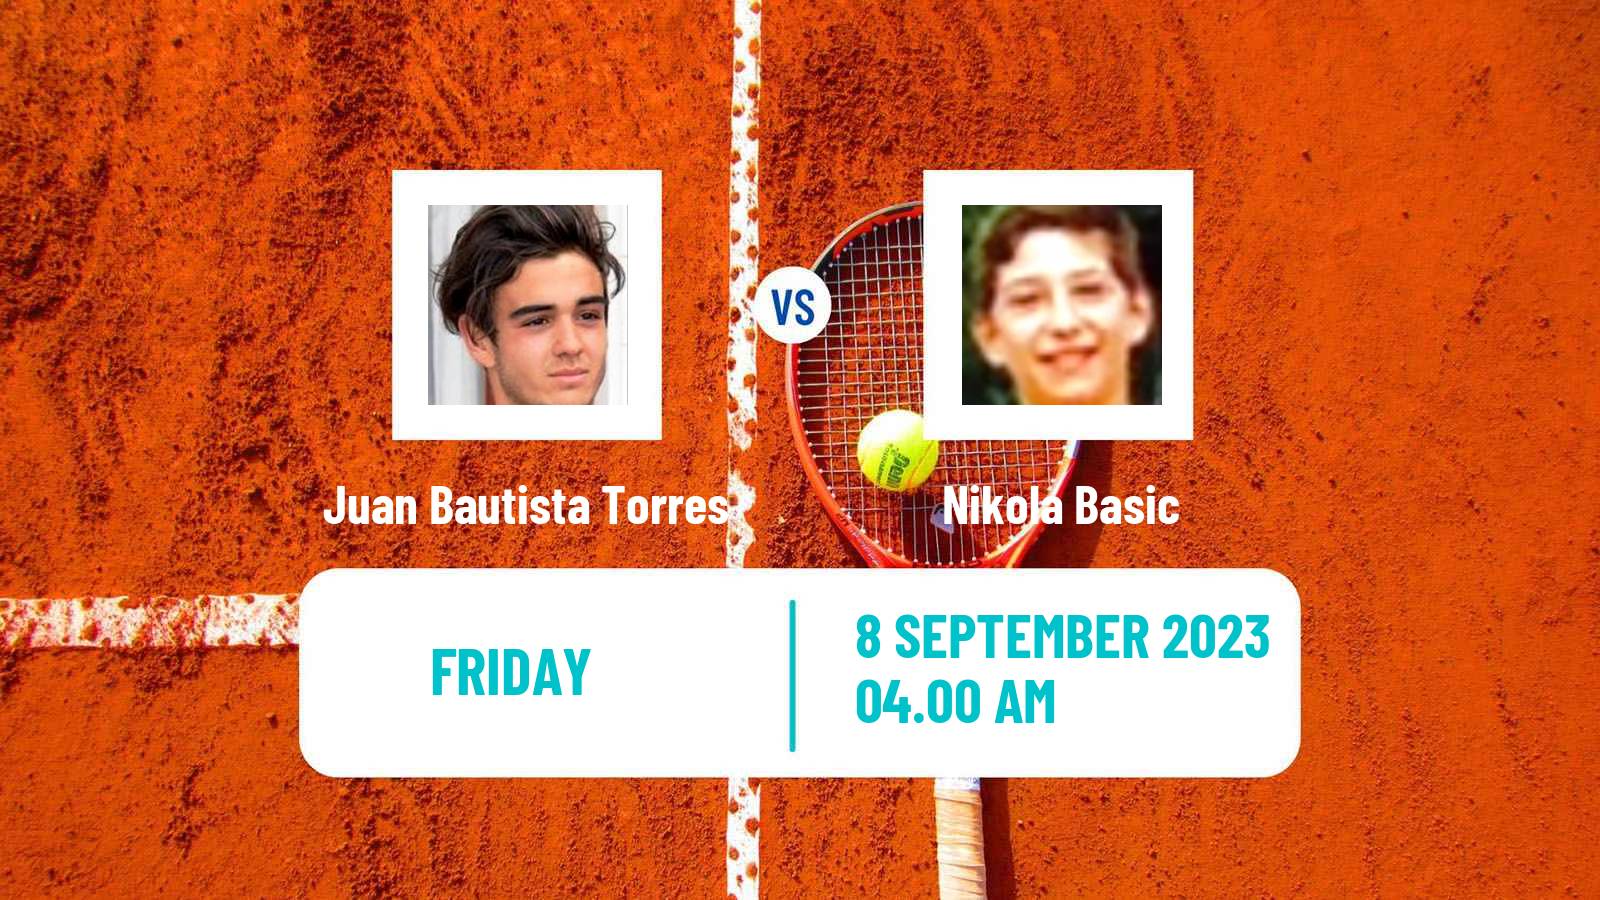 Tennis ITF M25 MarIBOr 2 Men Juan Bautista Torres - Nikola Basic